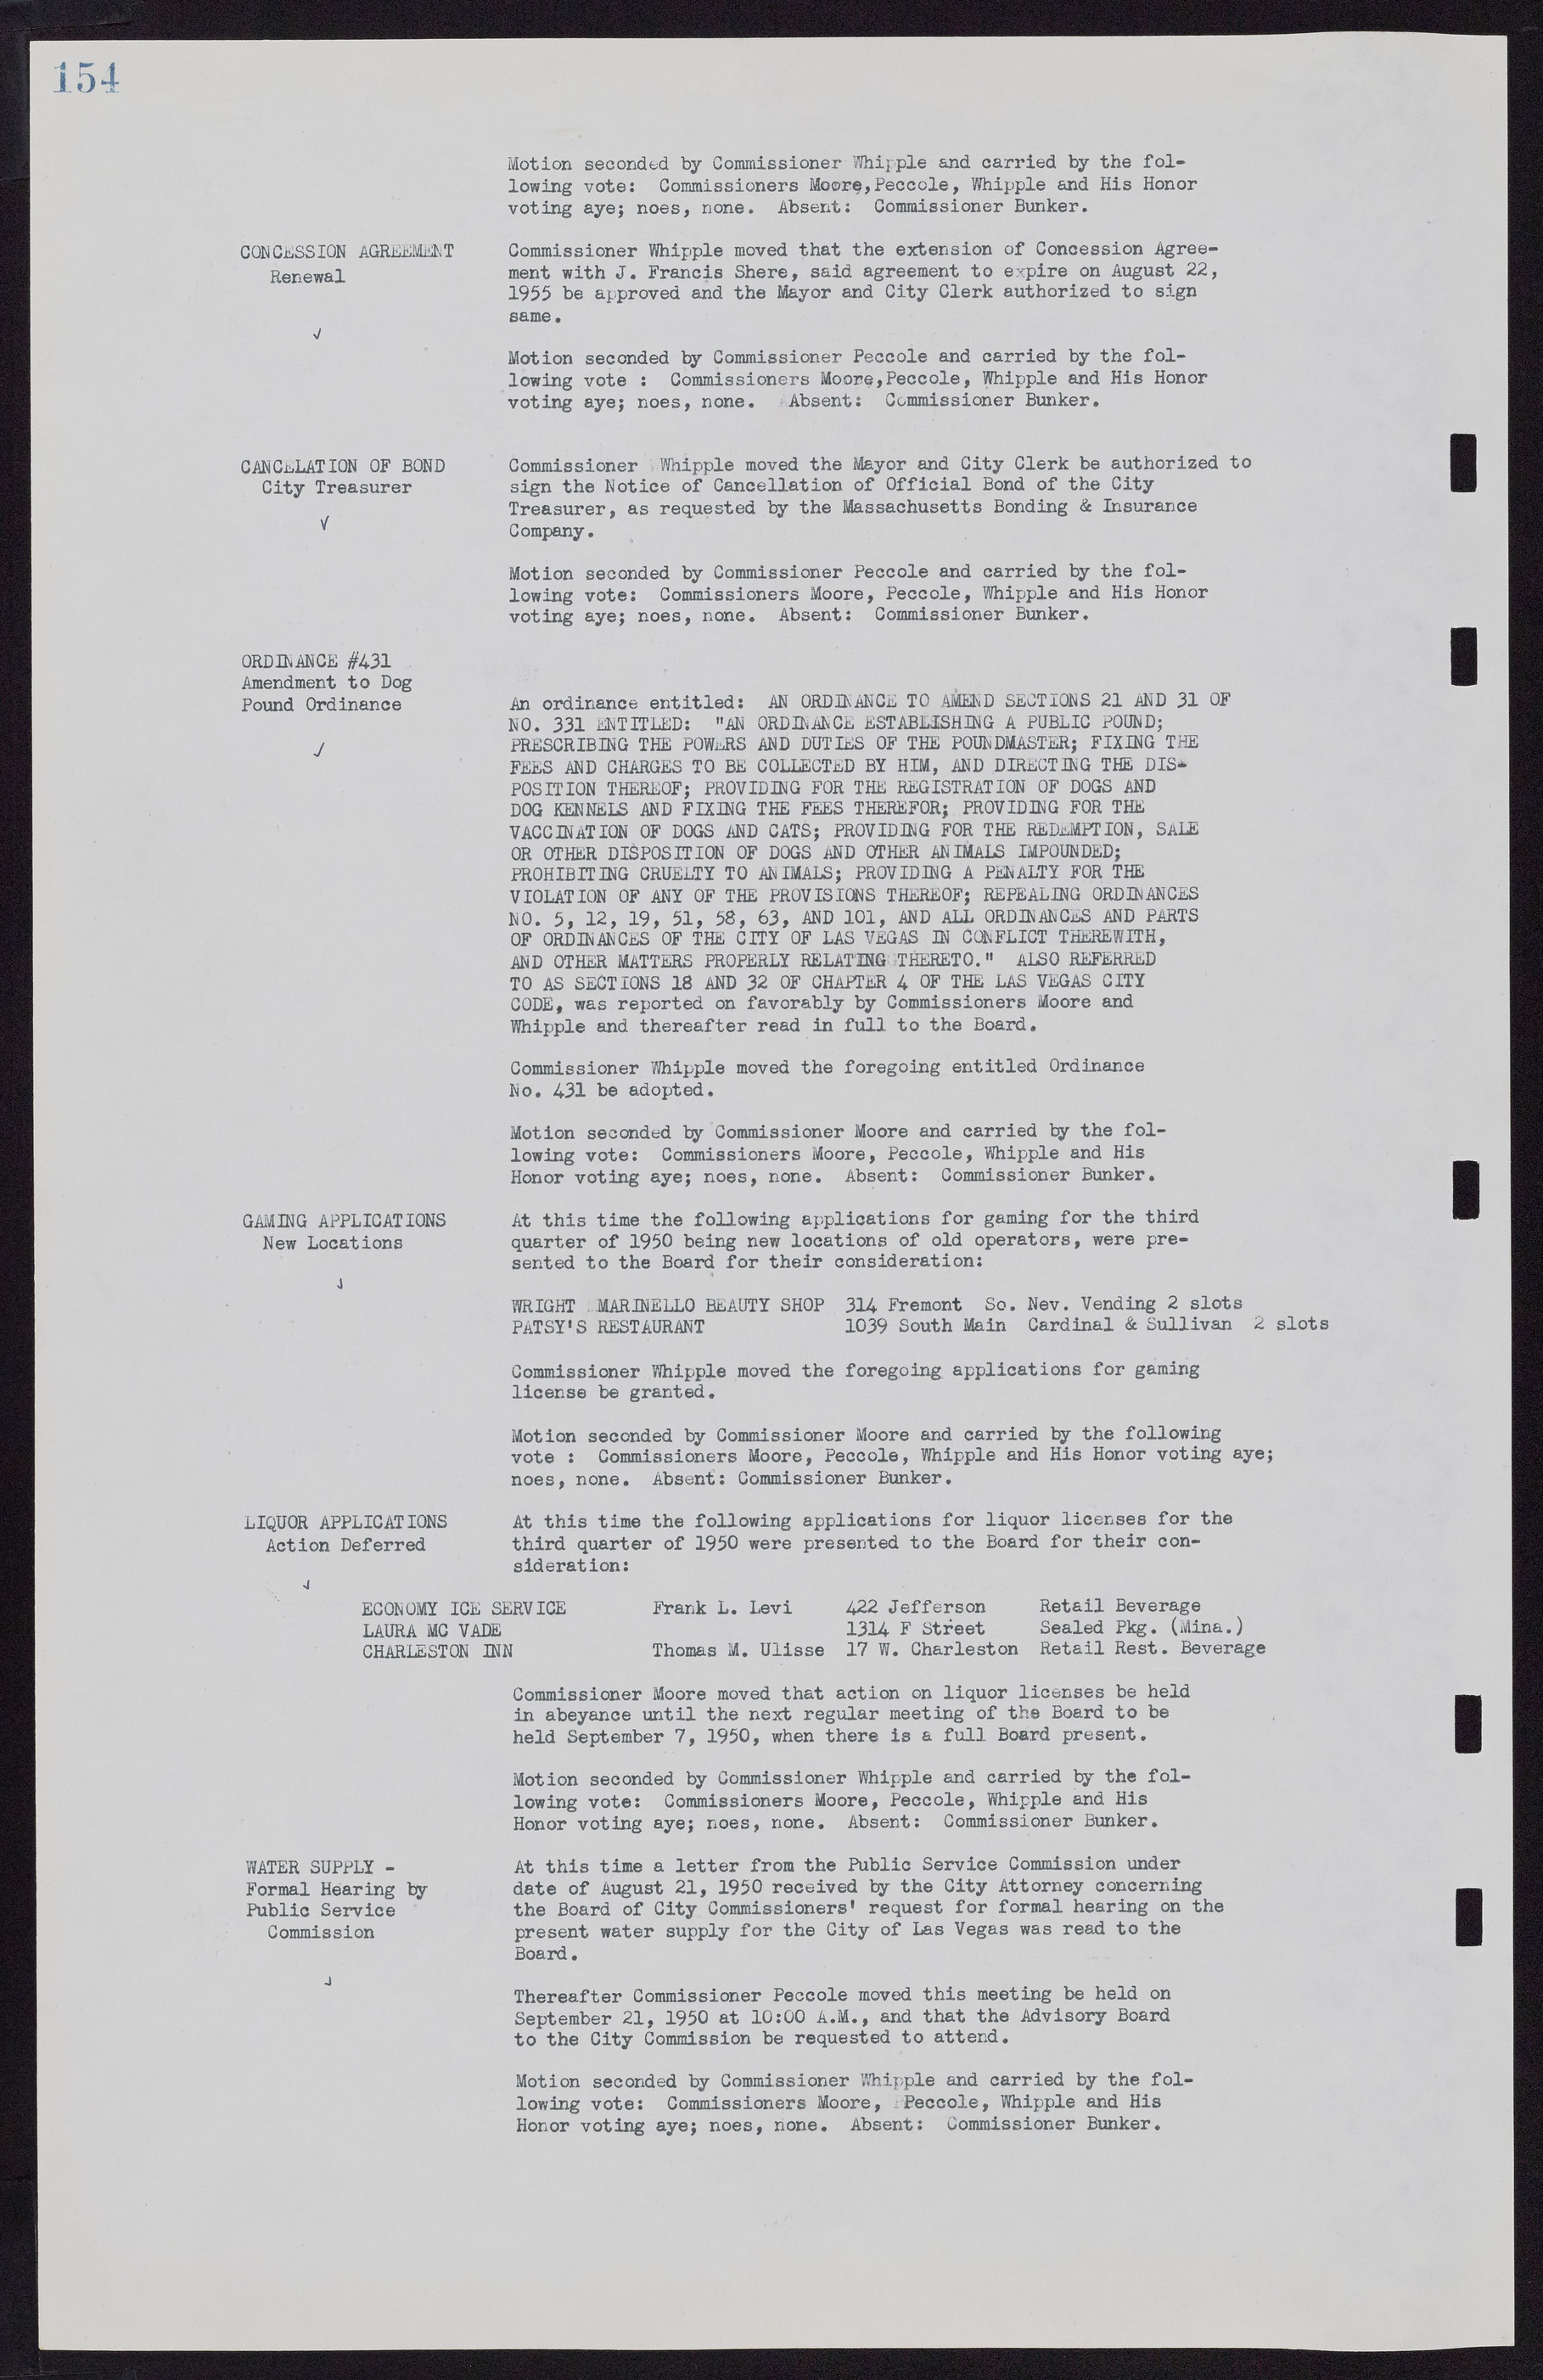 Las Vegas City Commission Minutes, November 7, 1949 to May 21, 1952, lvc000007-164